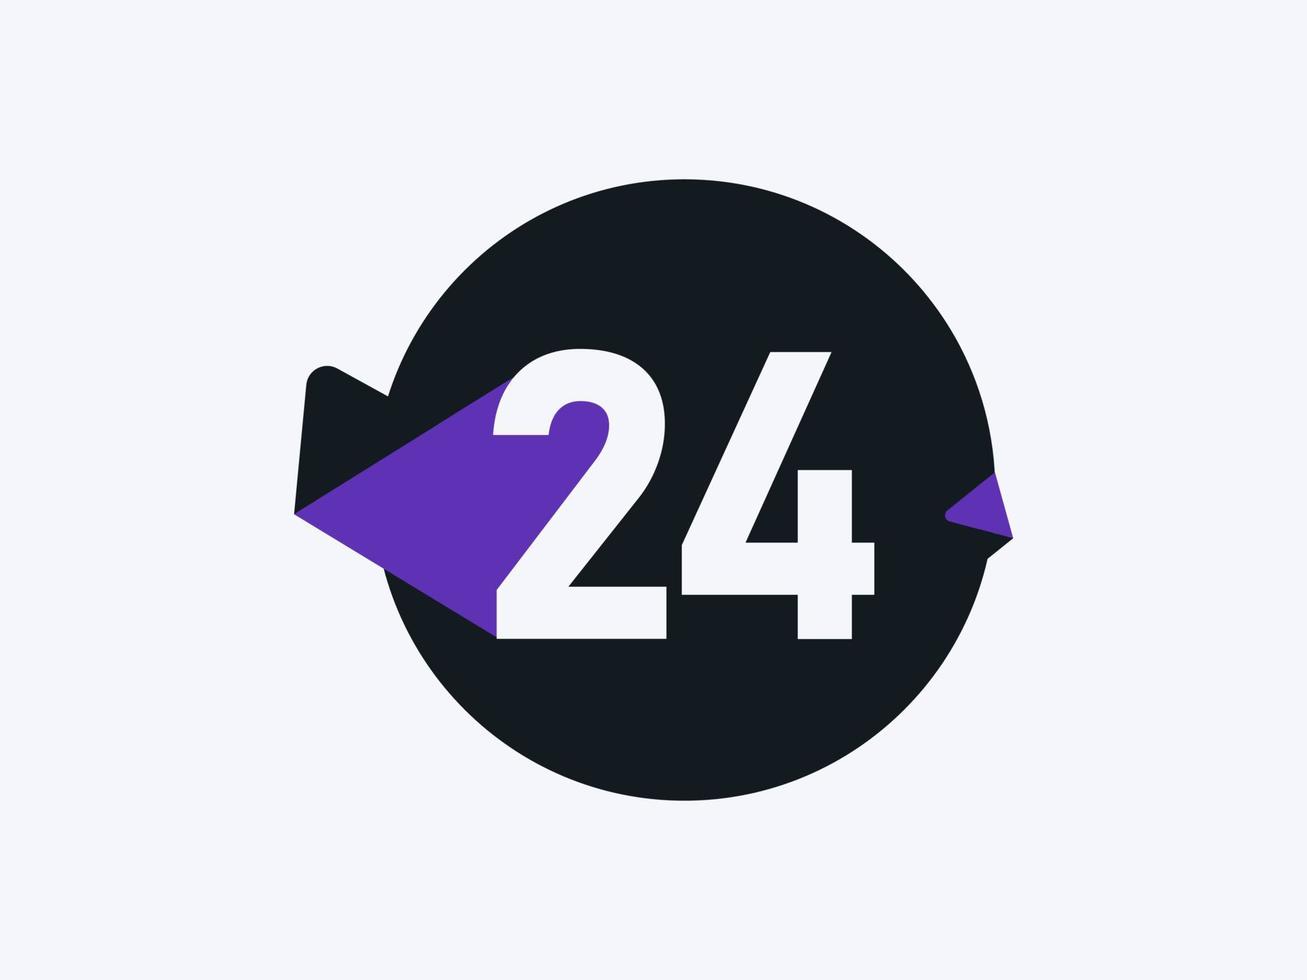 24 Number logo icon design vector image. Number logo icon design vector image